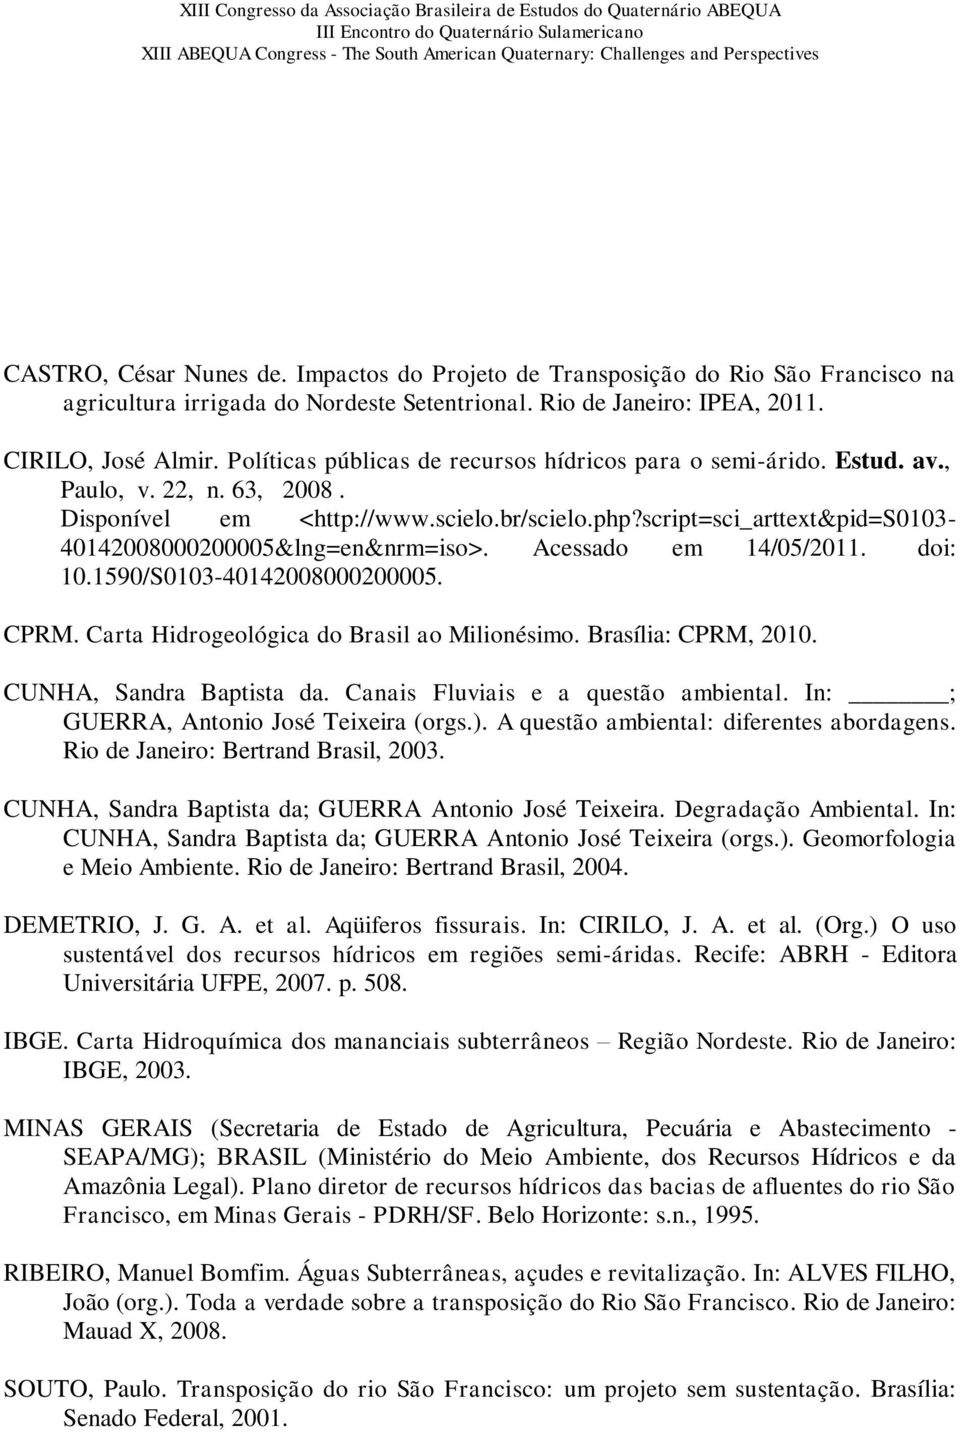 script=sci_arttext&pid=s0103-40142008000200005&lng=en&nrm=iso>. Acessado em 14/05/2011. doi: 10.1590/S0103-40142008000200005. CPRM. Carta Hidrogeológica do Brasil ao Milionésimo. Brasília: CPRM, 2010.